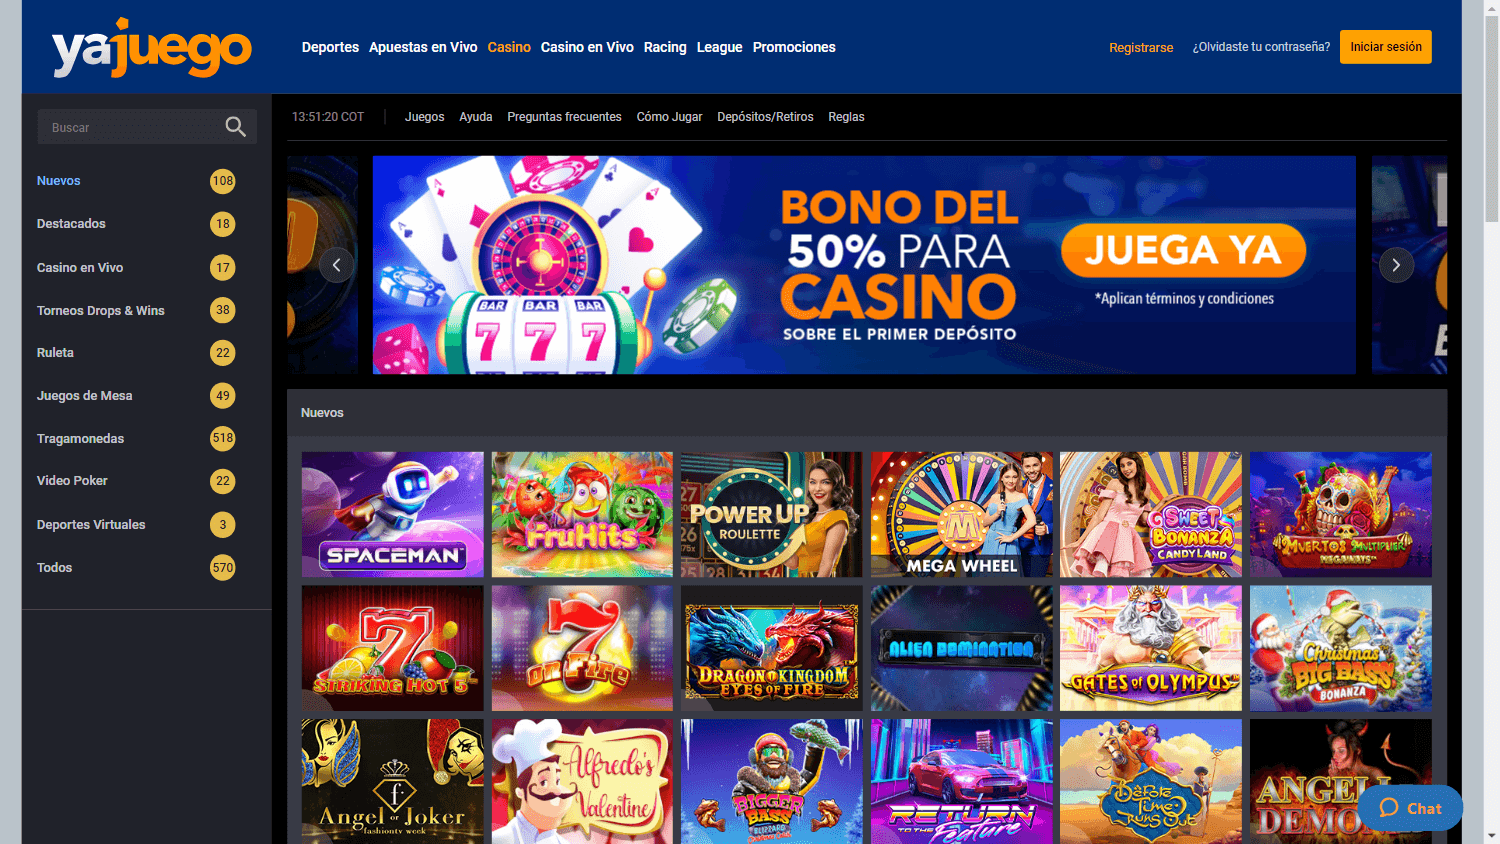 yajuego_casino_homepage_desktop